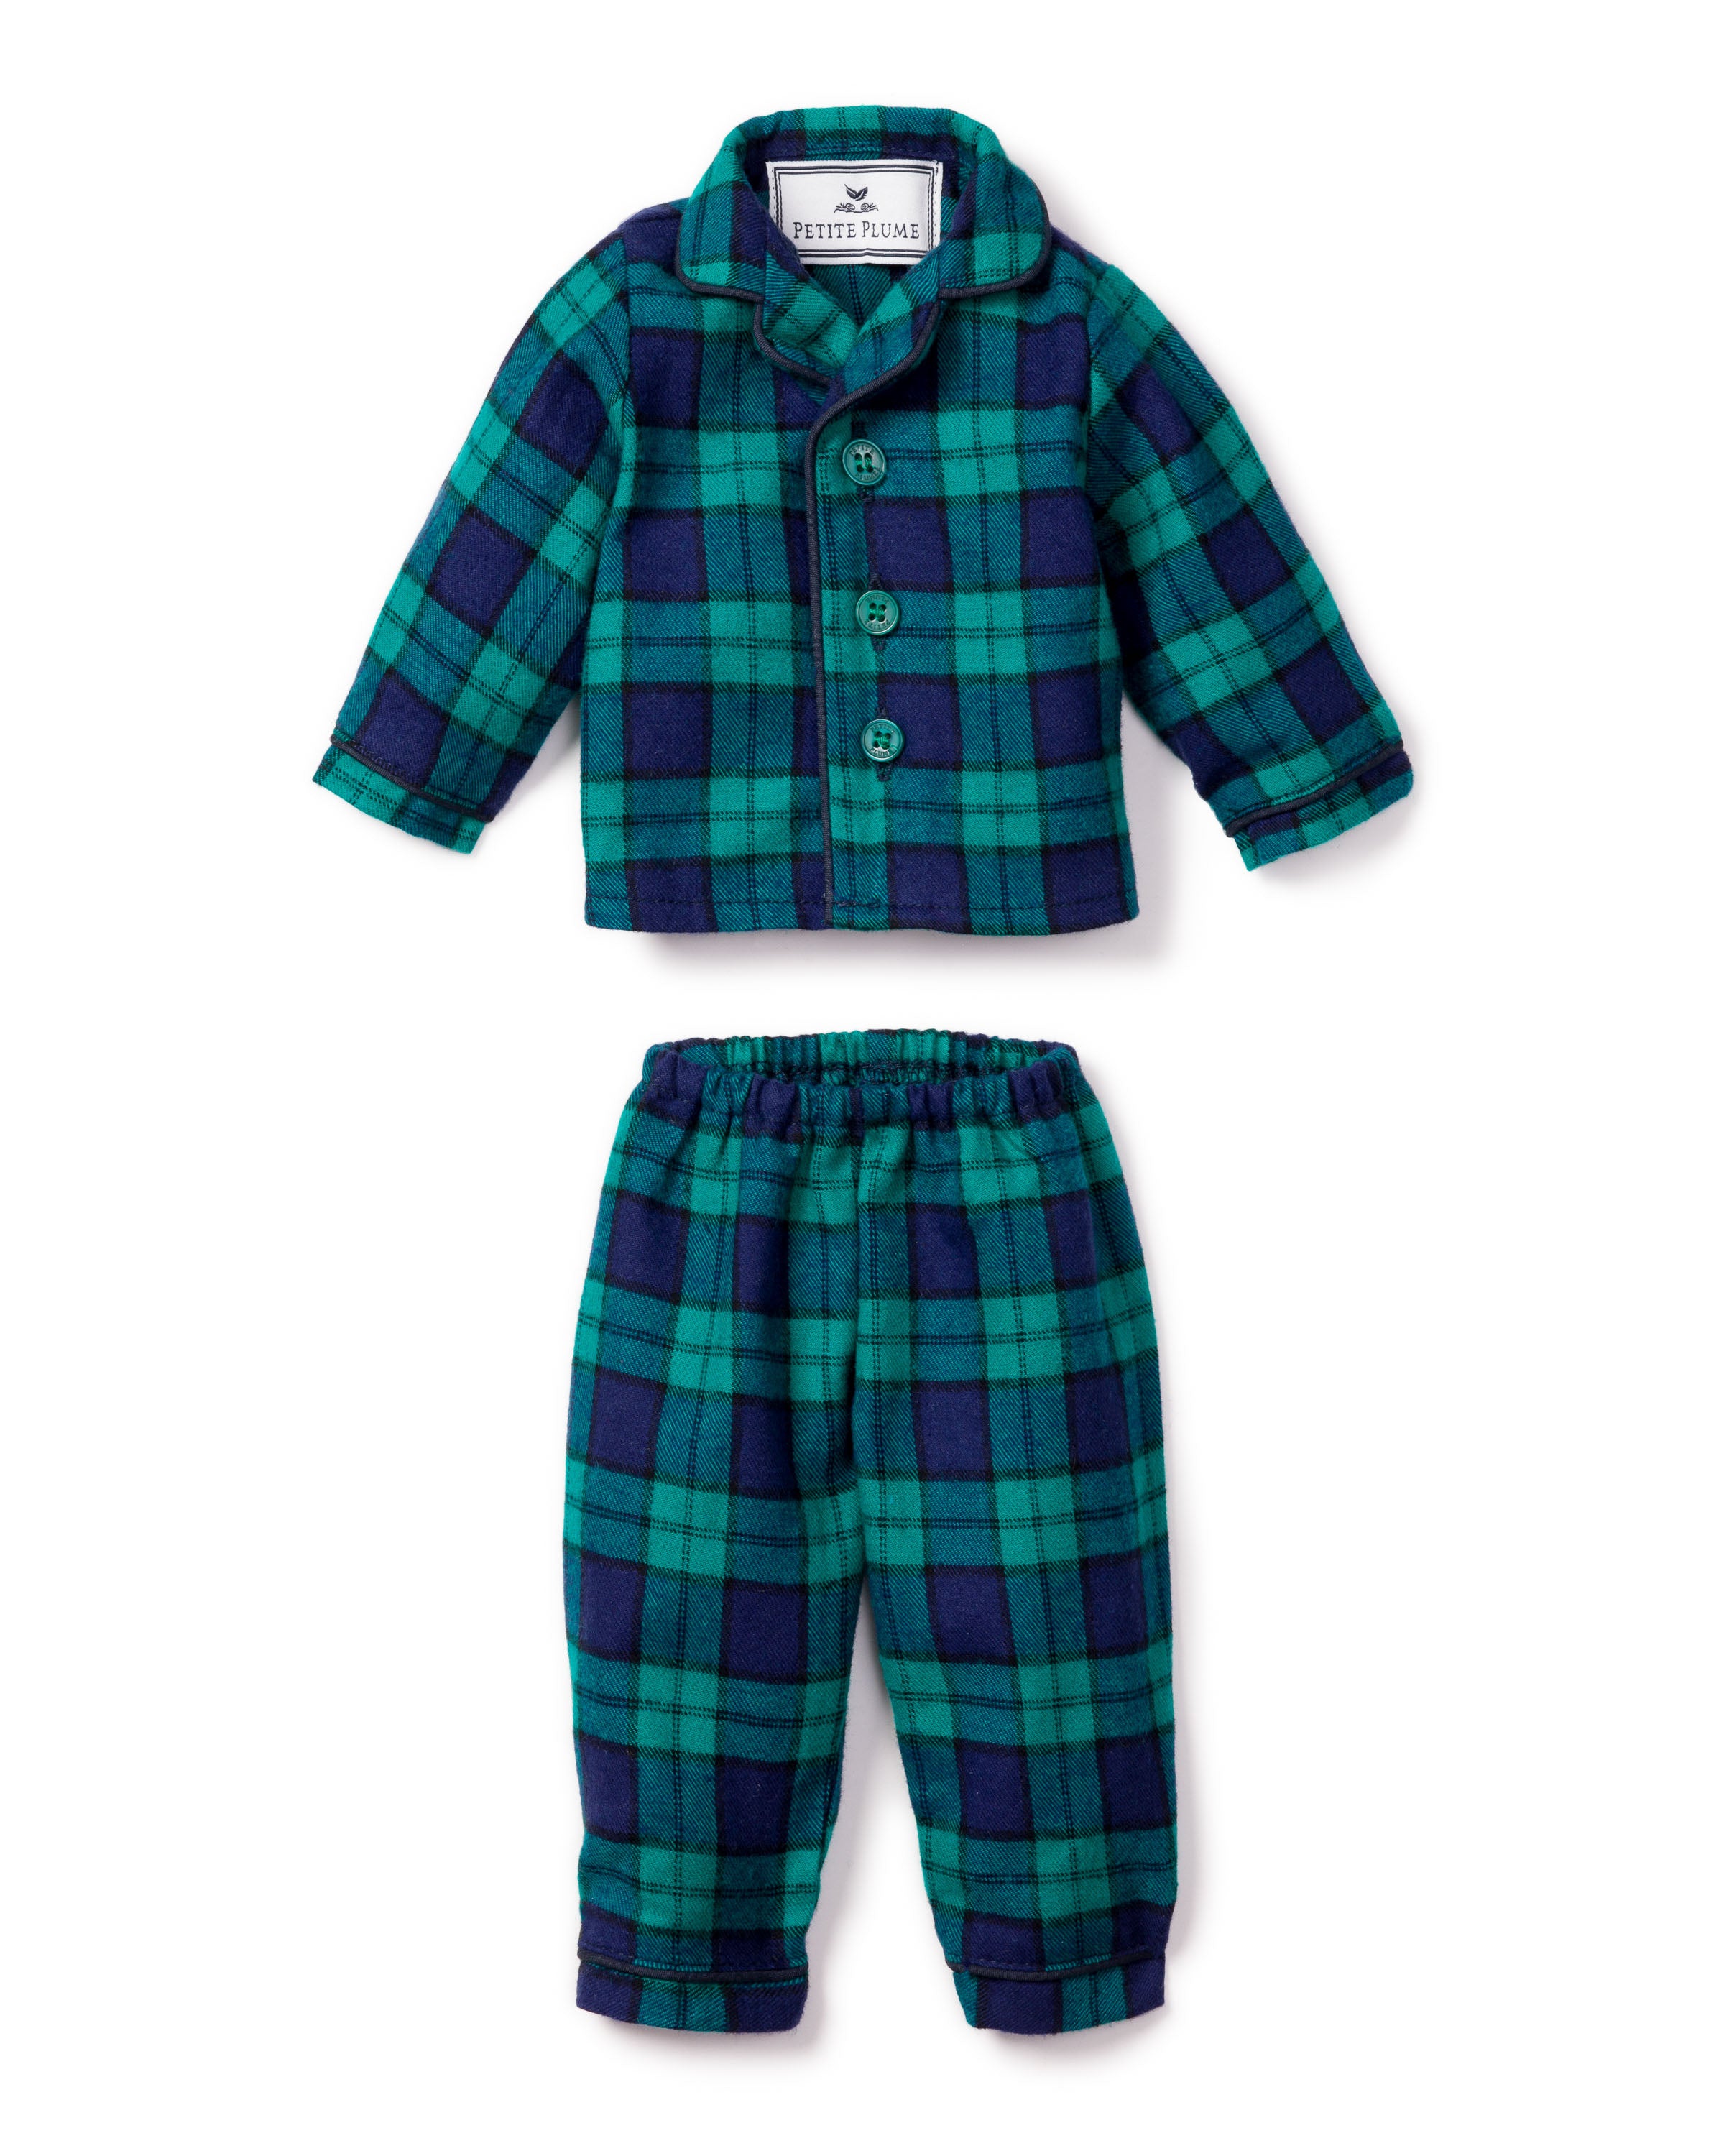 Doll Pajamas in Highland Tartan